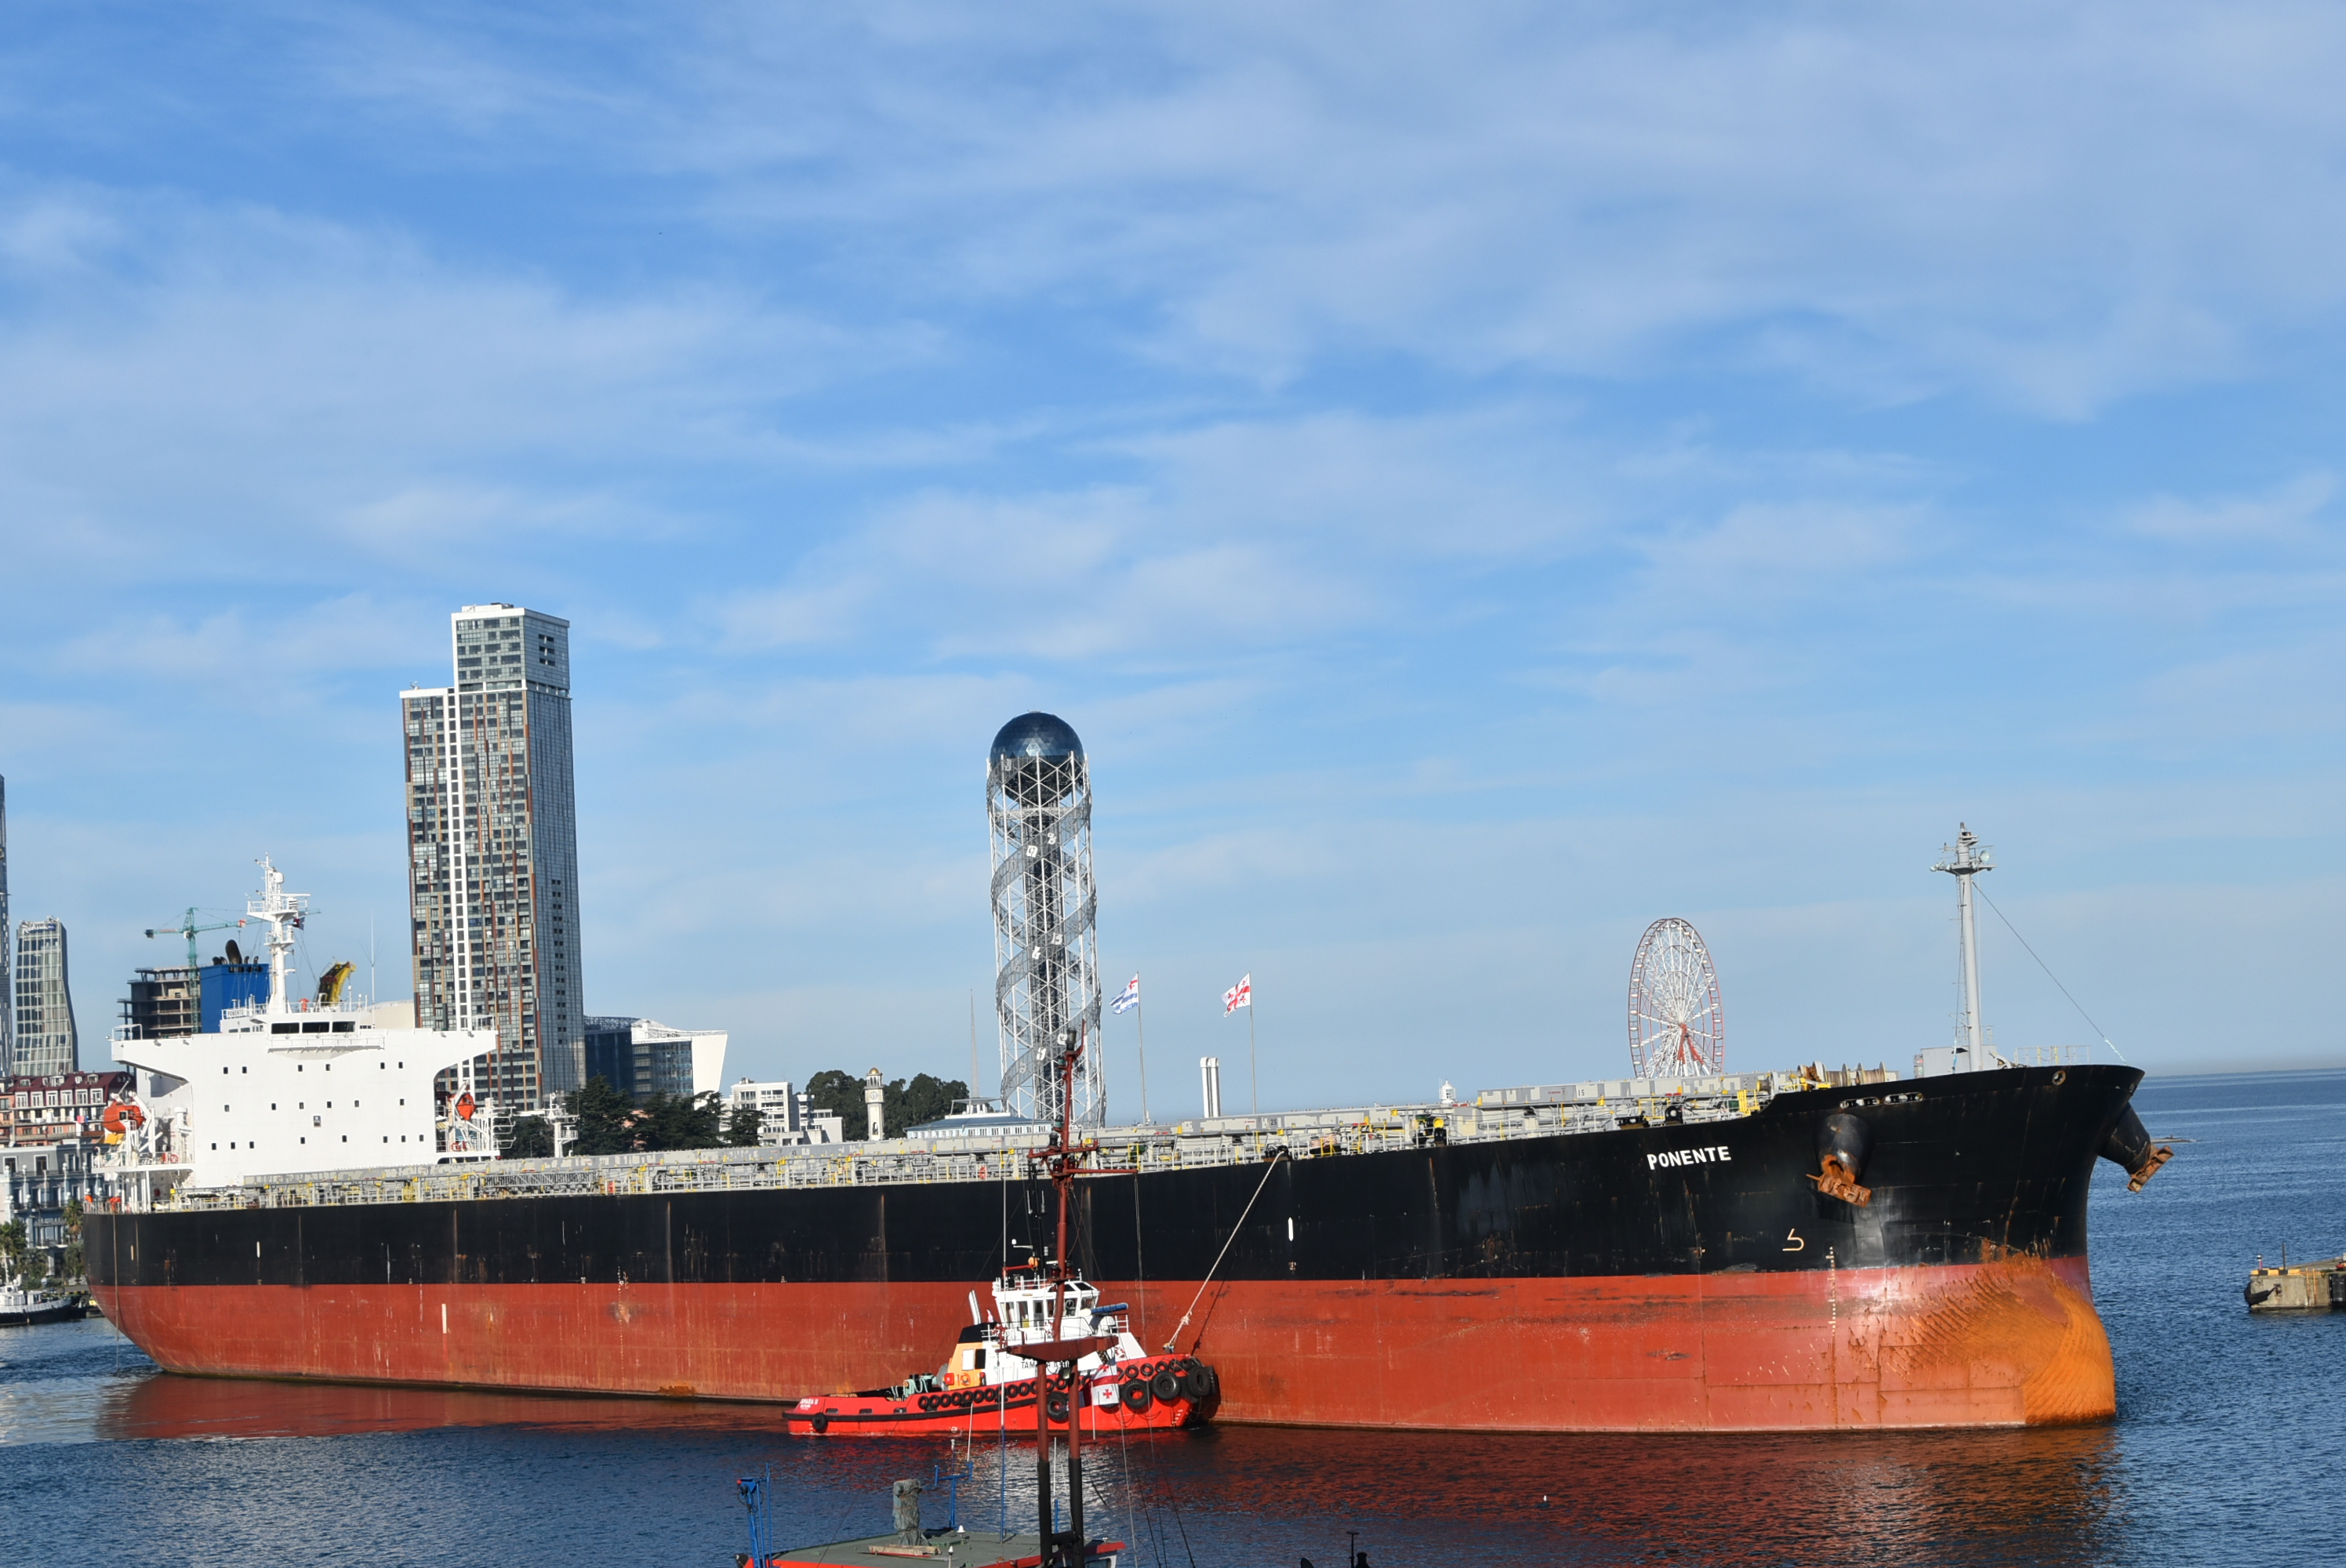 "PONENTE" has arrived: Batumi Sea Port has received a record size ship